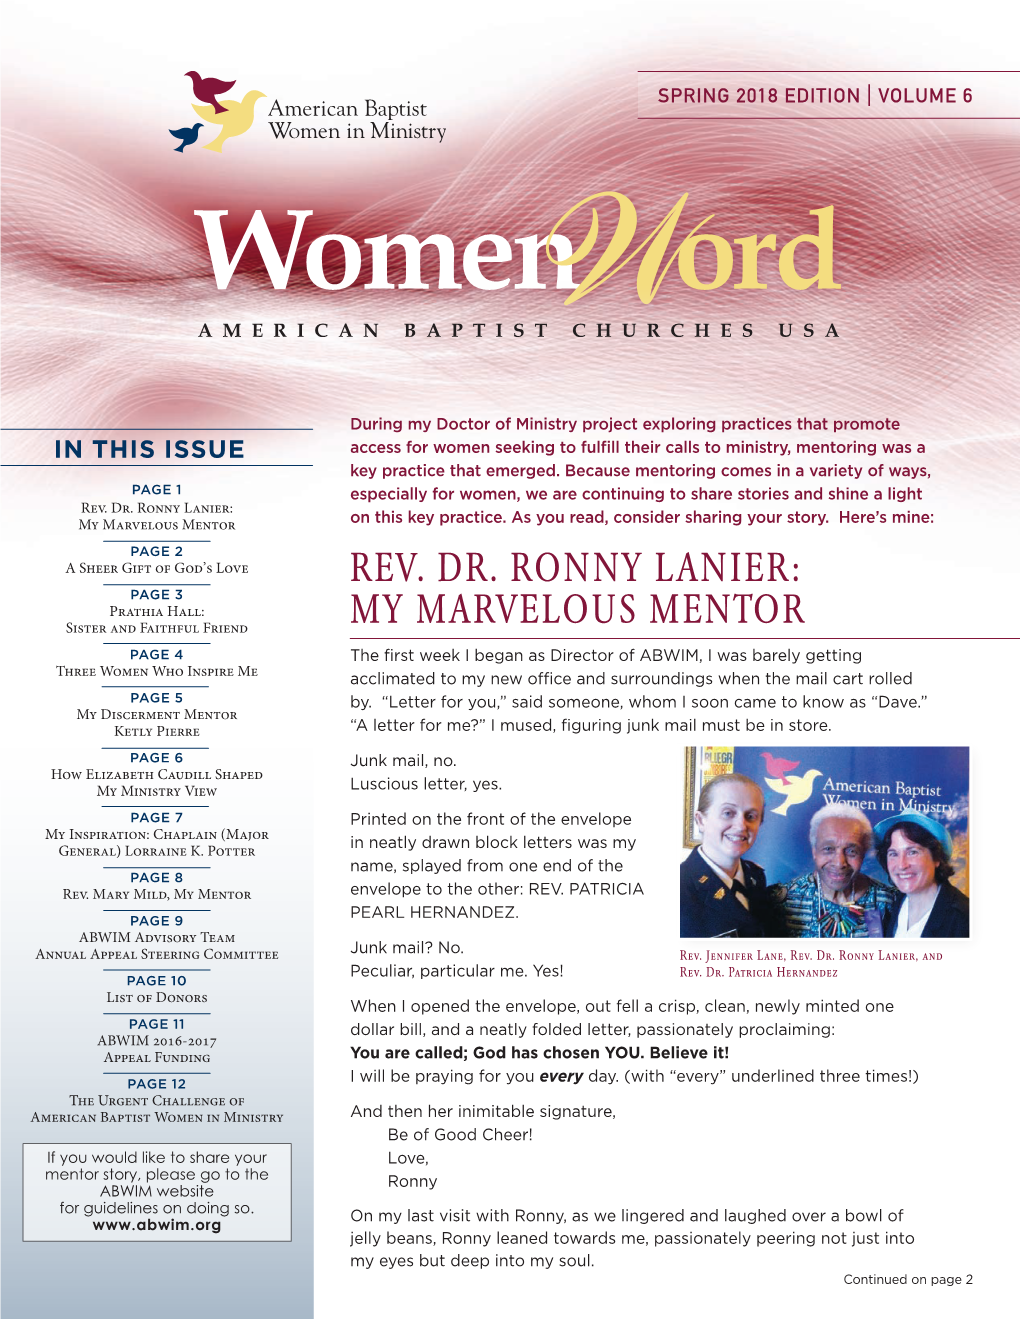 Rev. Dr. Ronny Lanier: on This Key Practice